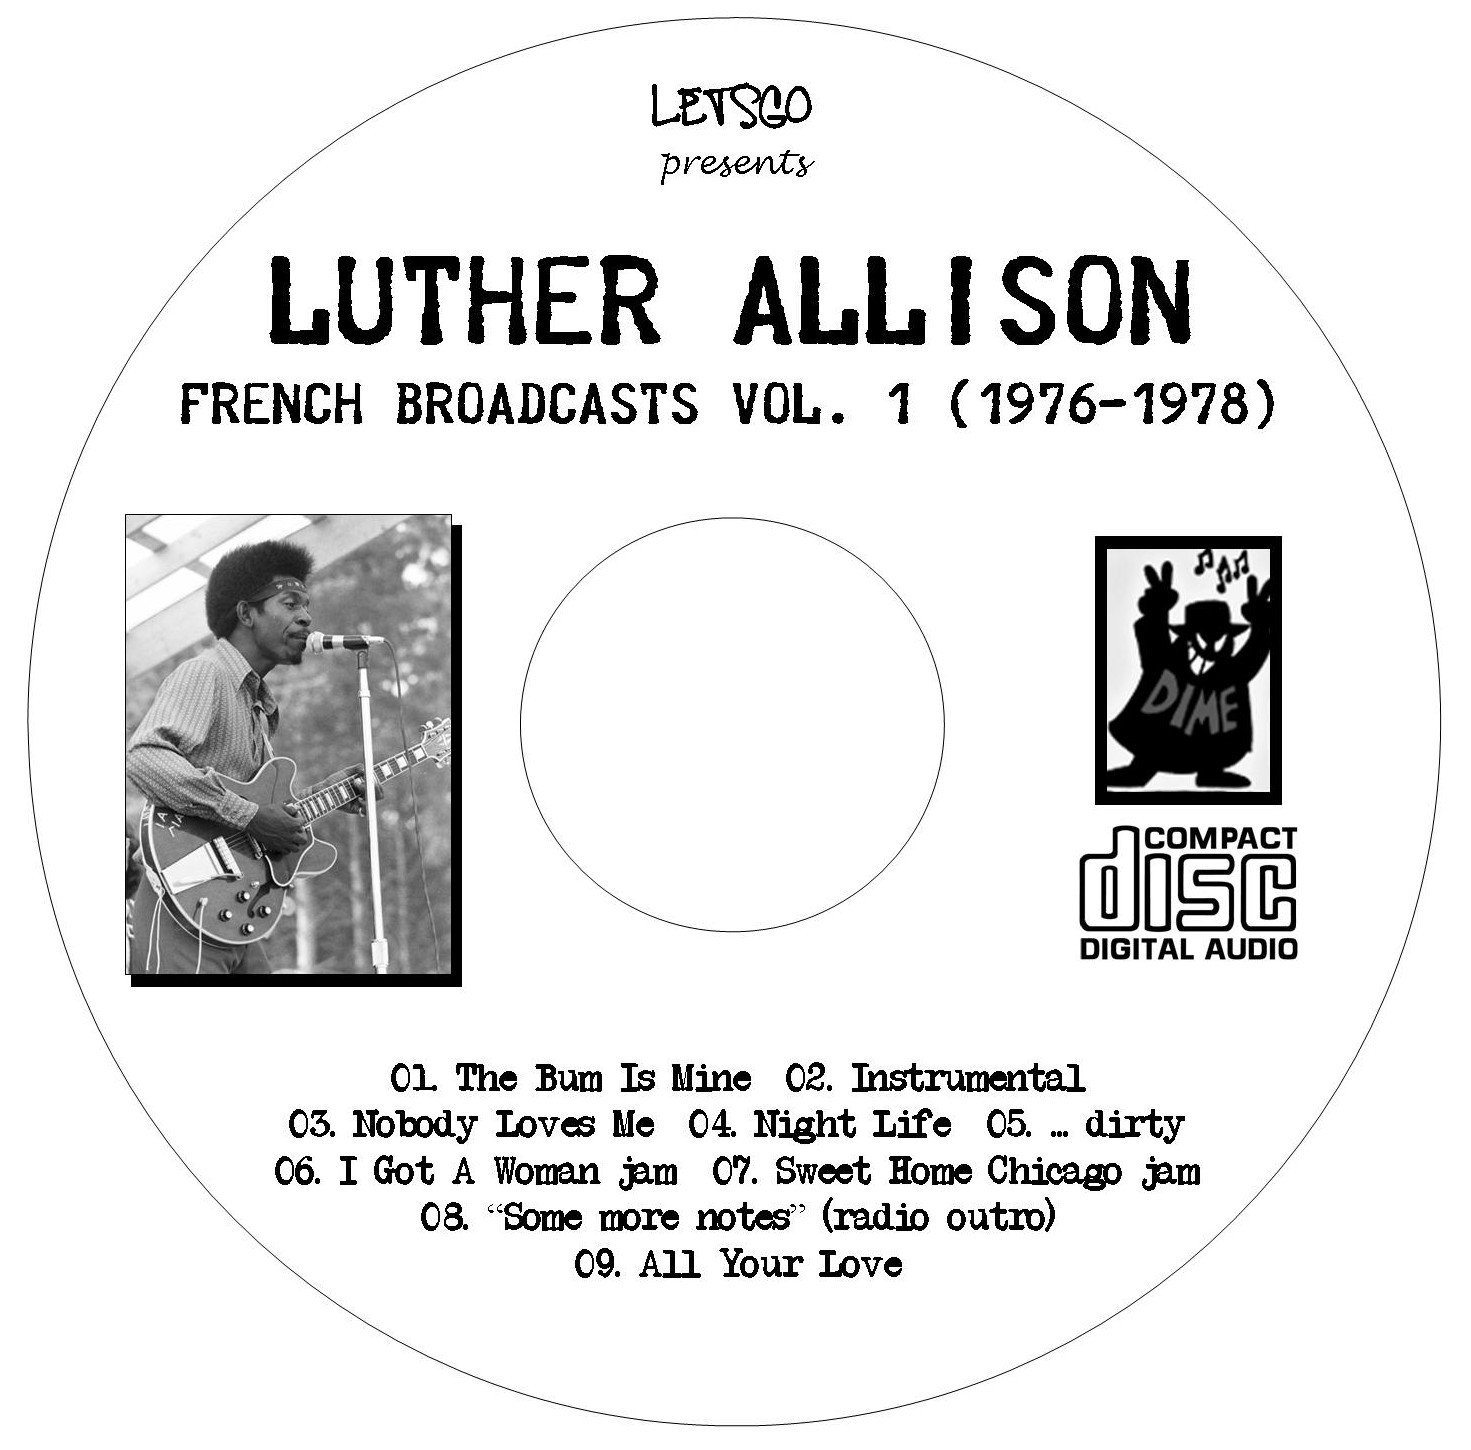 LutherAllison1976-1978FrenchBroadcastsVol1 (2).jpg